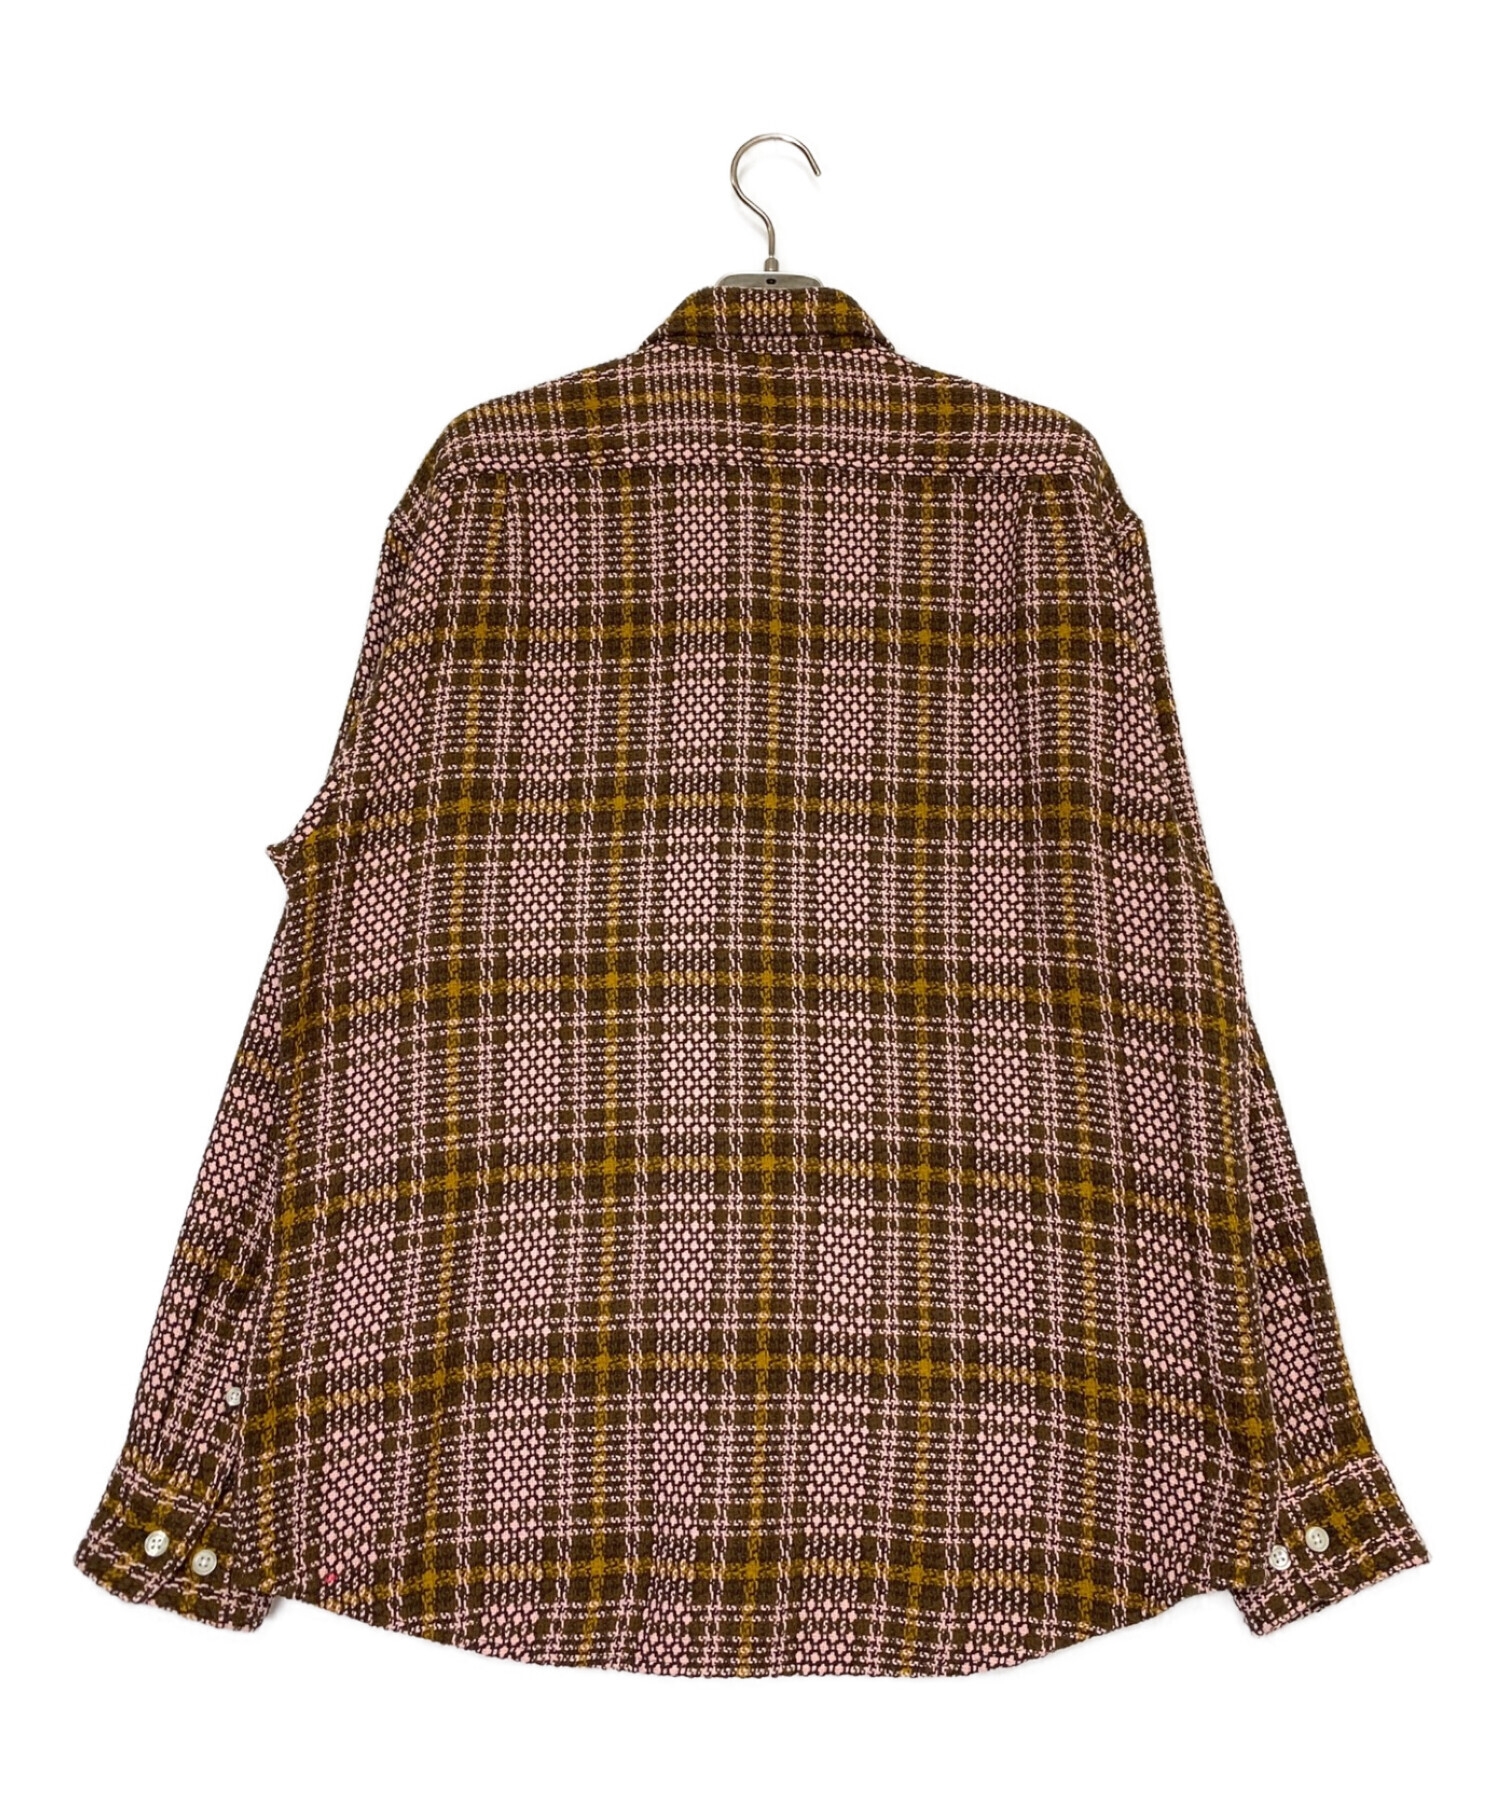 SUPREME (シュプリーム) Basket Weave Plaid Shirt ブラウン×ピンク サイズ:S